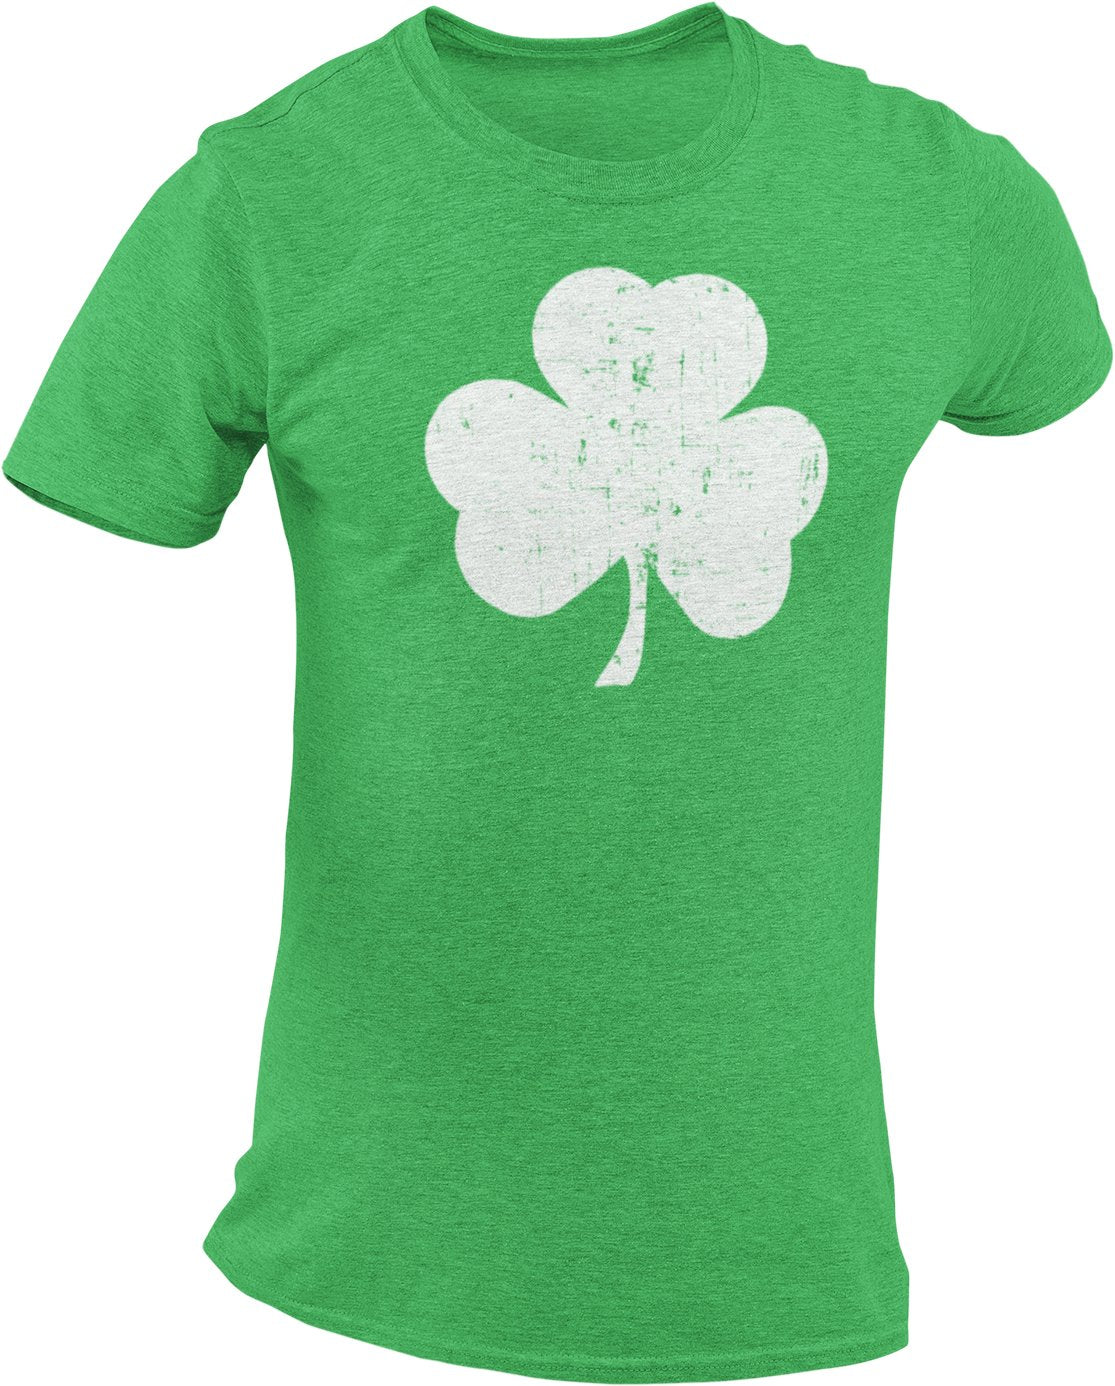 Men's Shamrock T-Shirt St Patricks Day Irish Tee (Heather Green, Distressed)